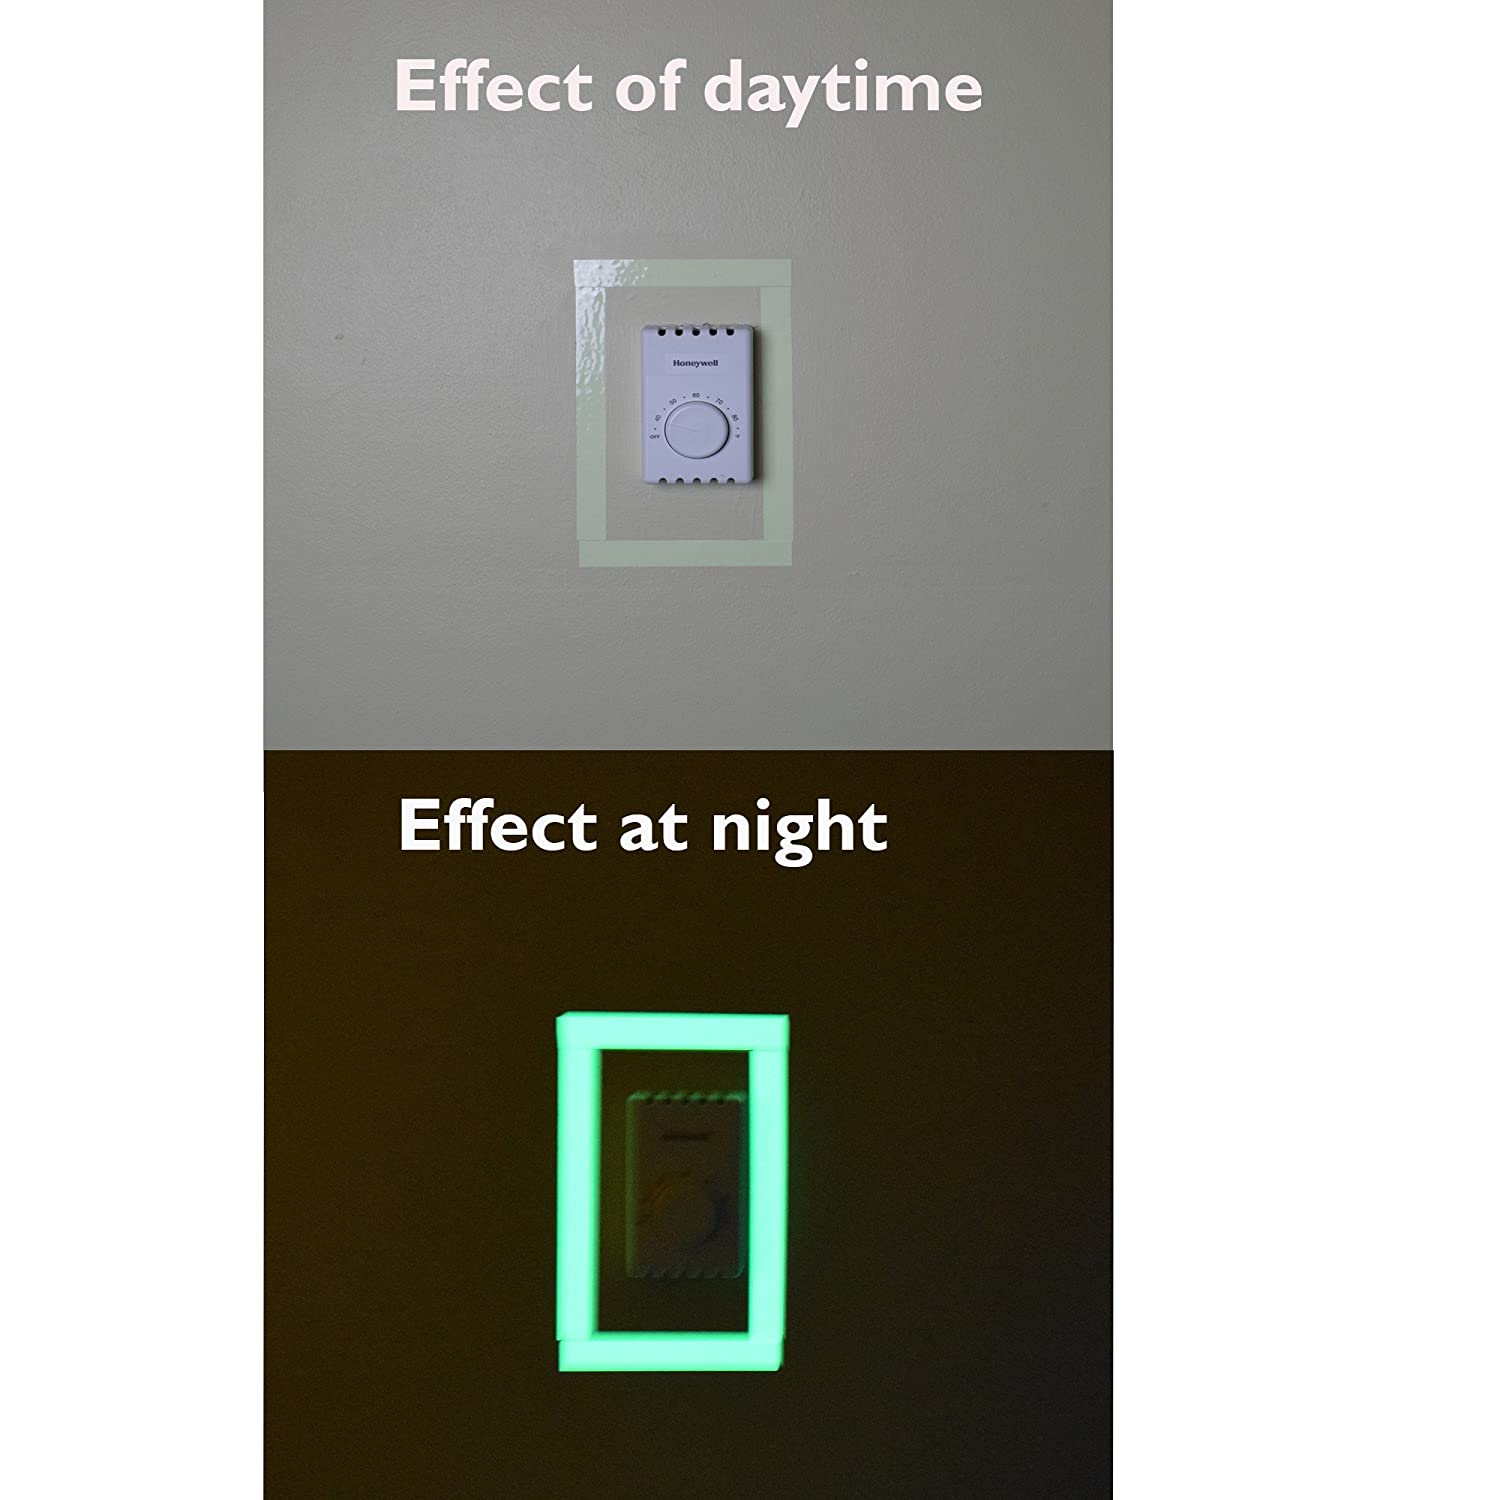 Glow in The Dark Tape Sticker, Photo Luminescent to Mark Stairs 20mm*5m LifeKrafts